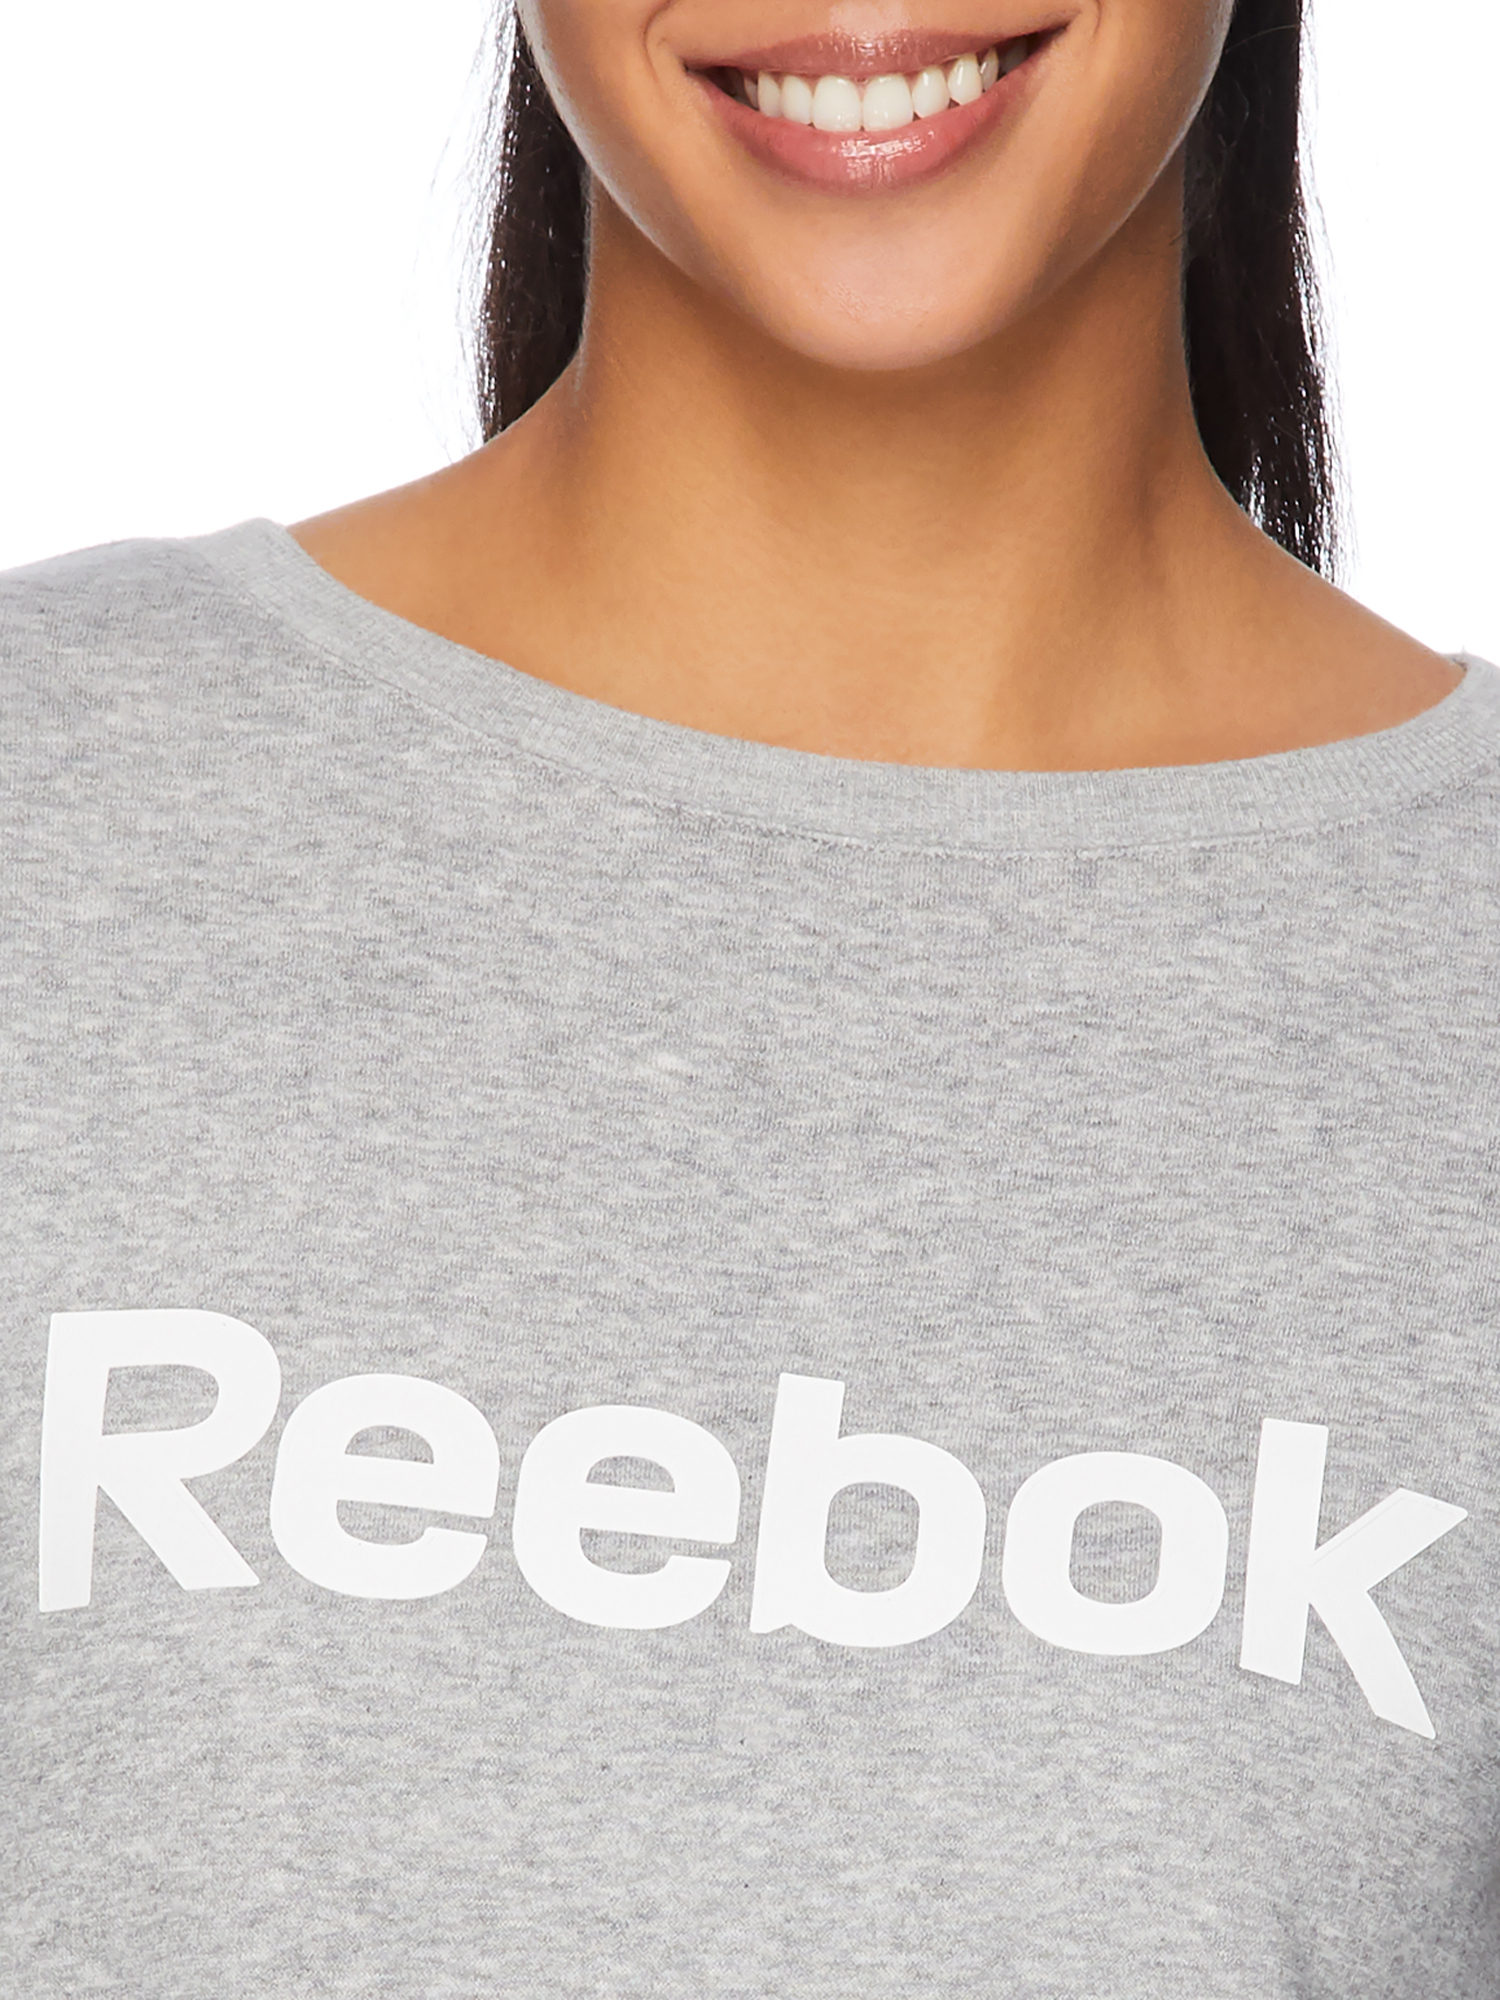 Reebok Women's Athleisure Fleece Crew - image 4 of 4